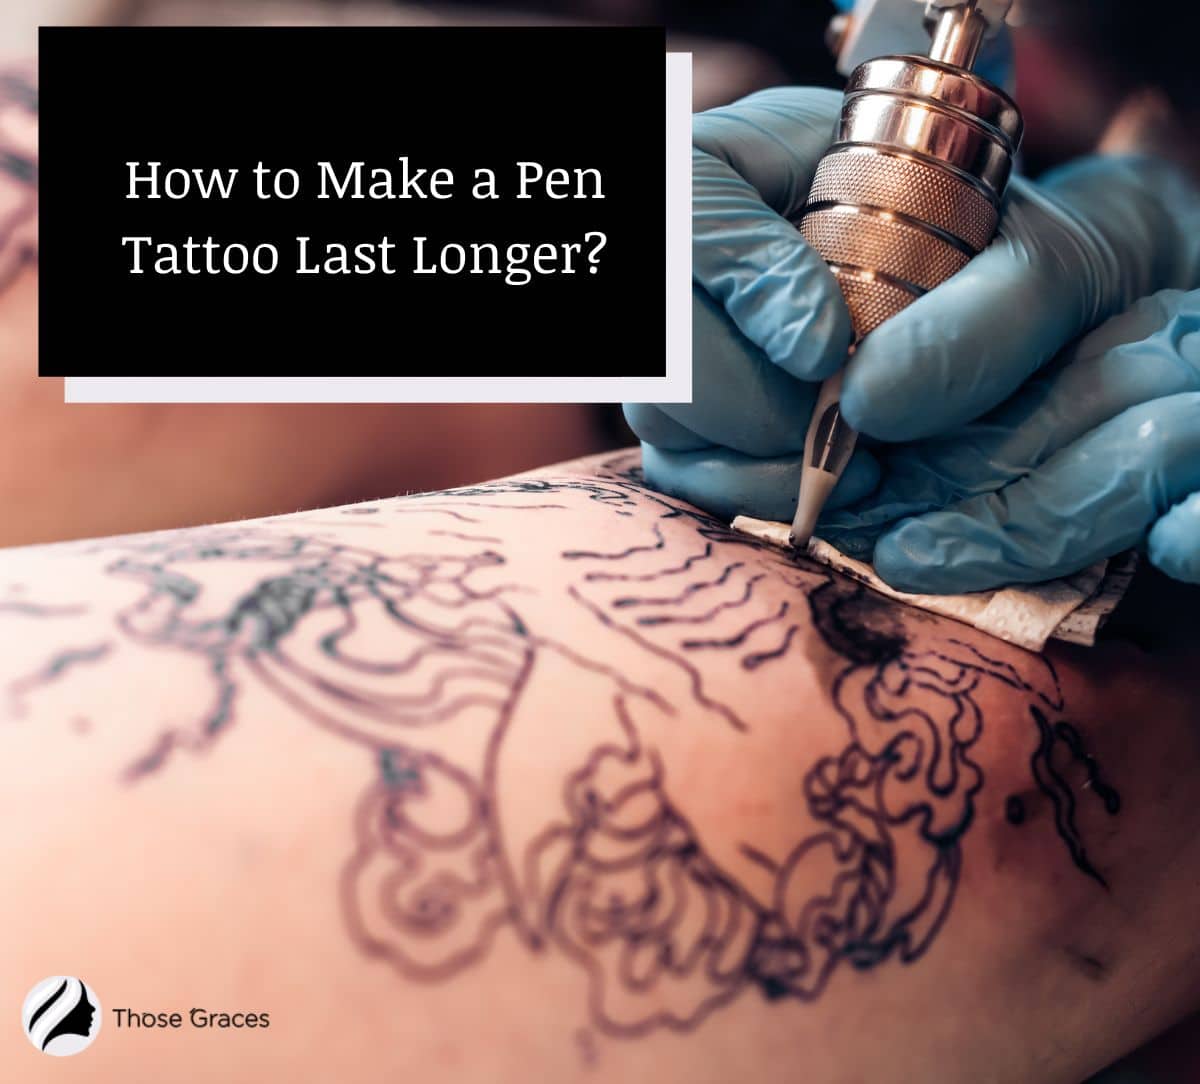 women getting pen tattoo but how to make a pen tattoo last longer